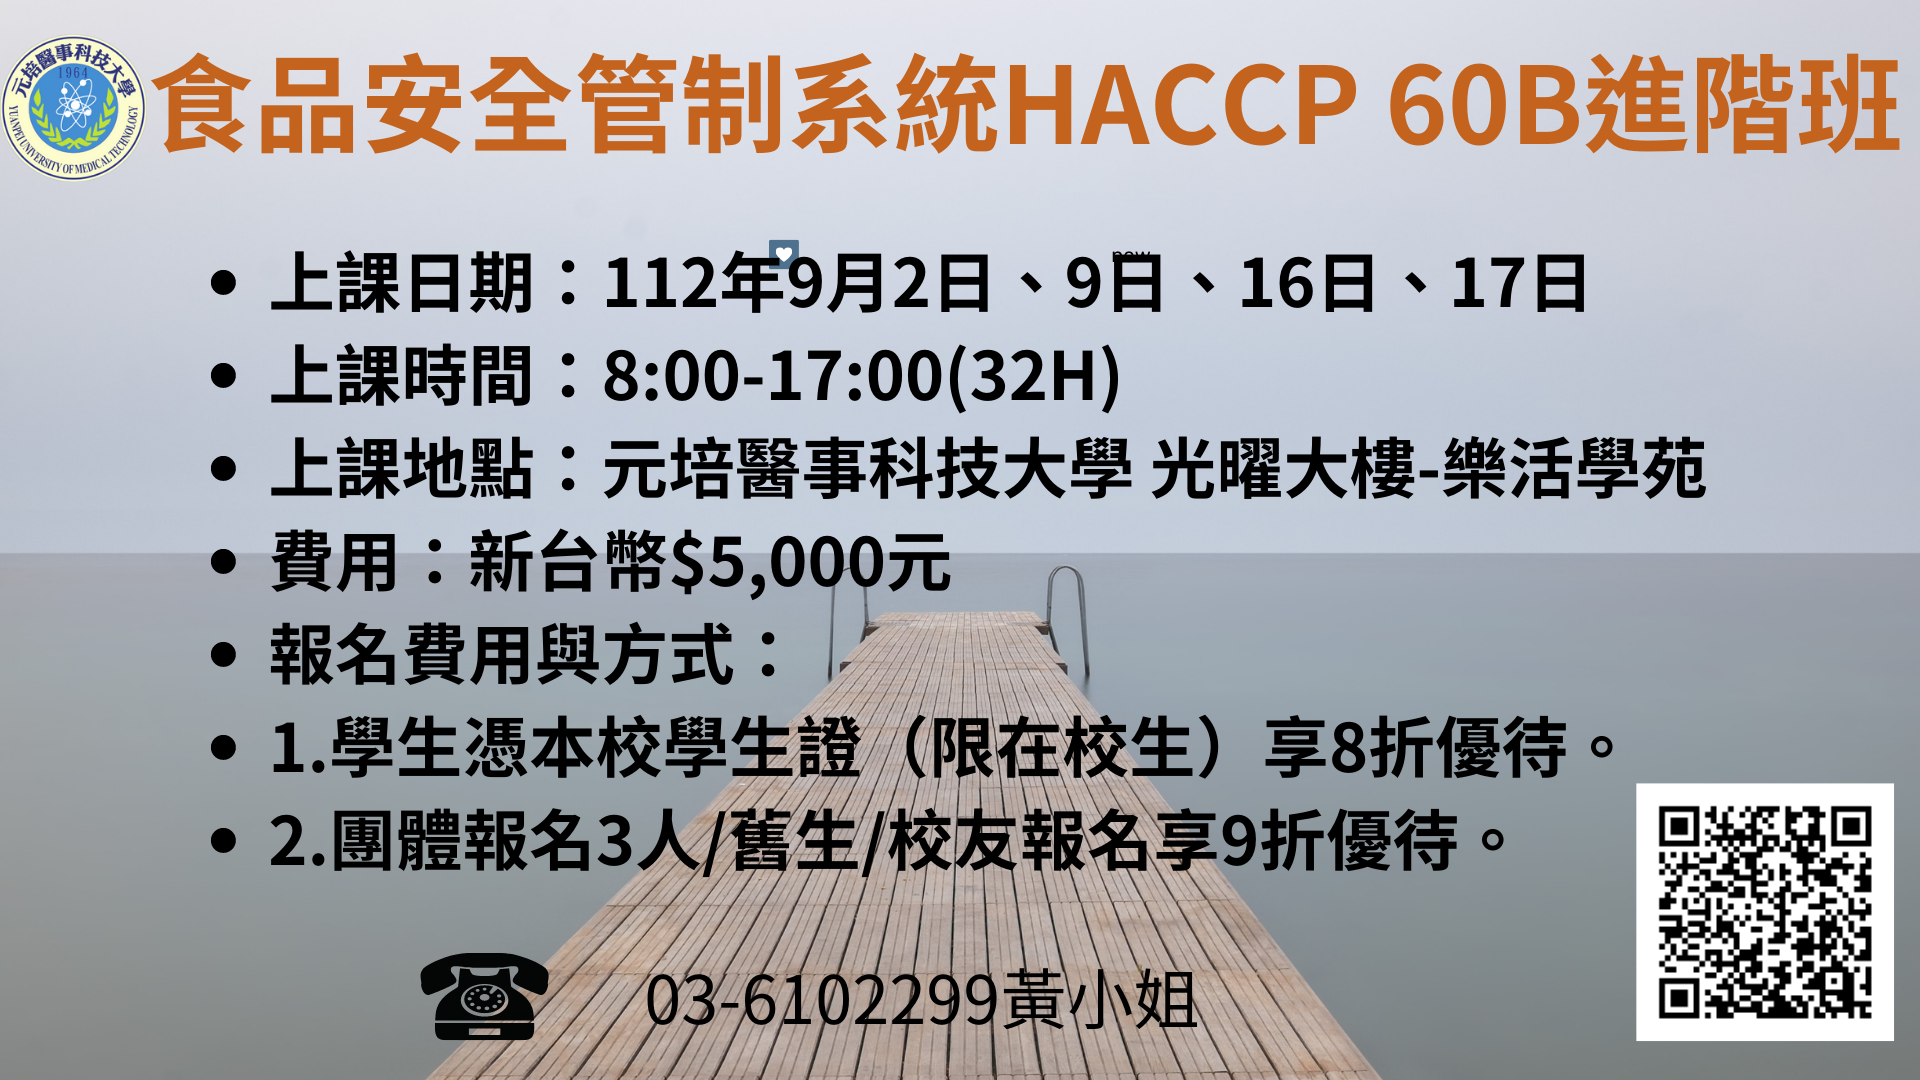 HACCP 60B文宣